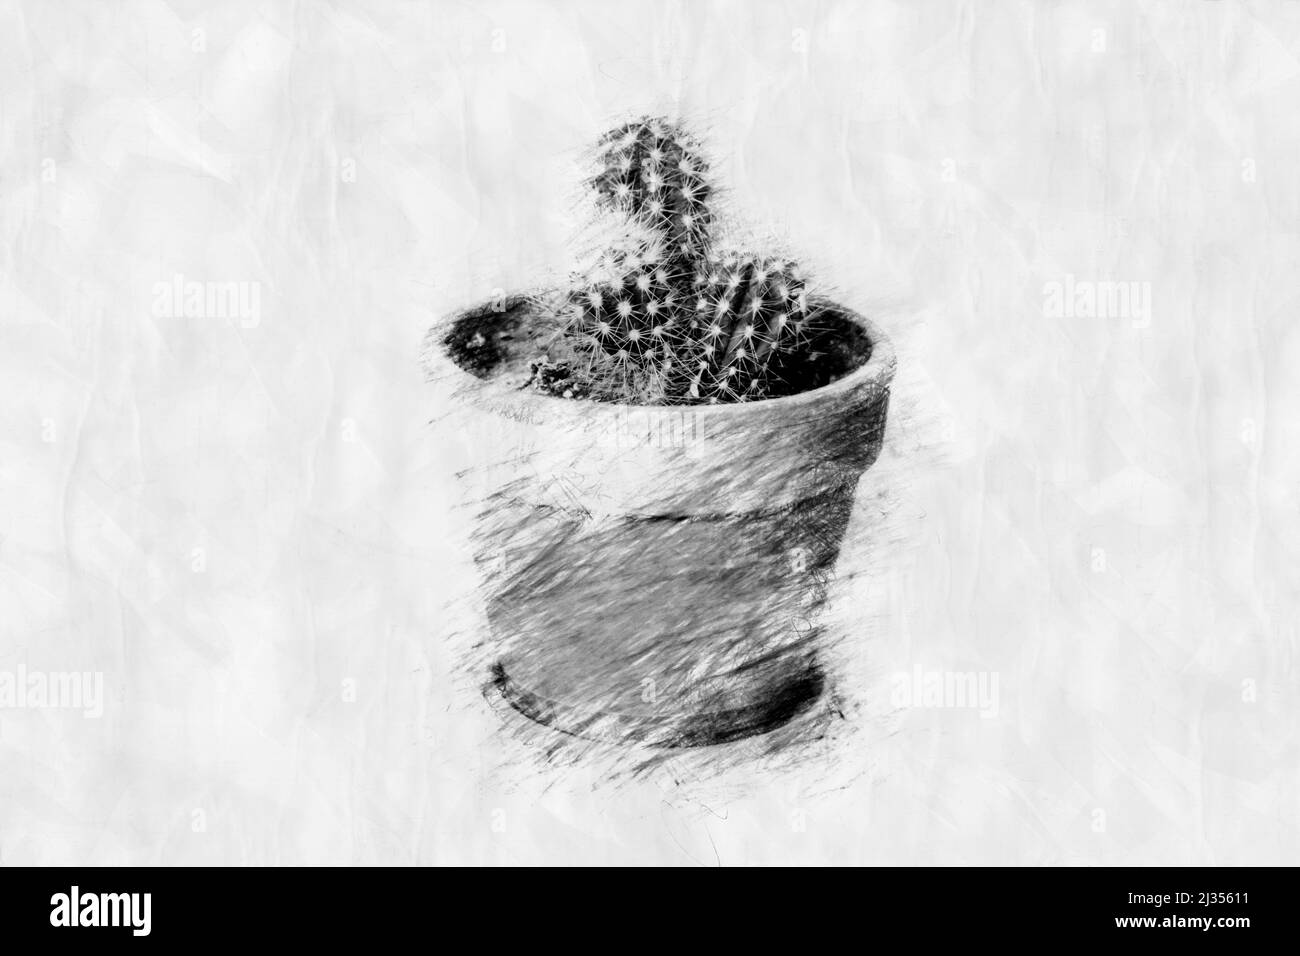 flower pot pencil drawing  Cactus drawing, Nature art drawings, Art  drawings sketches simple